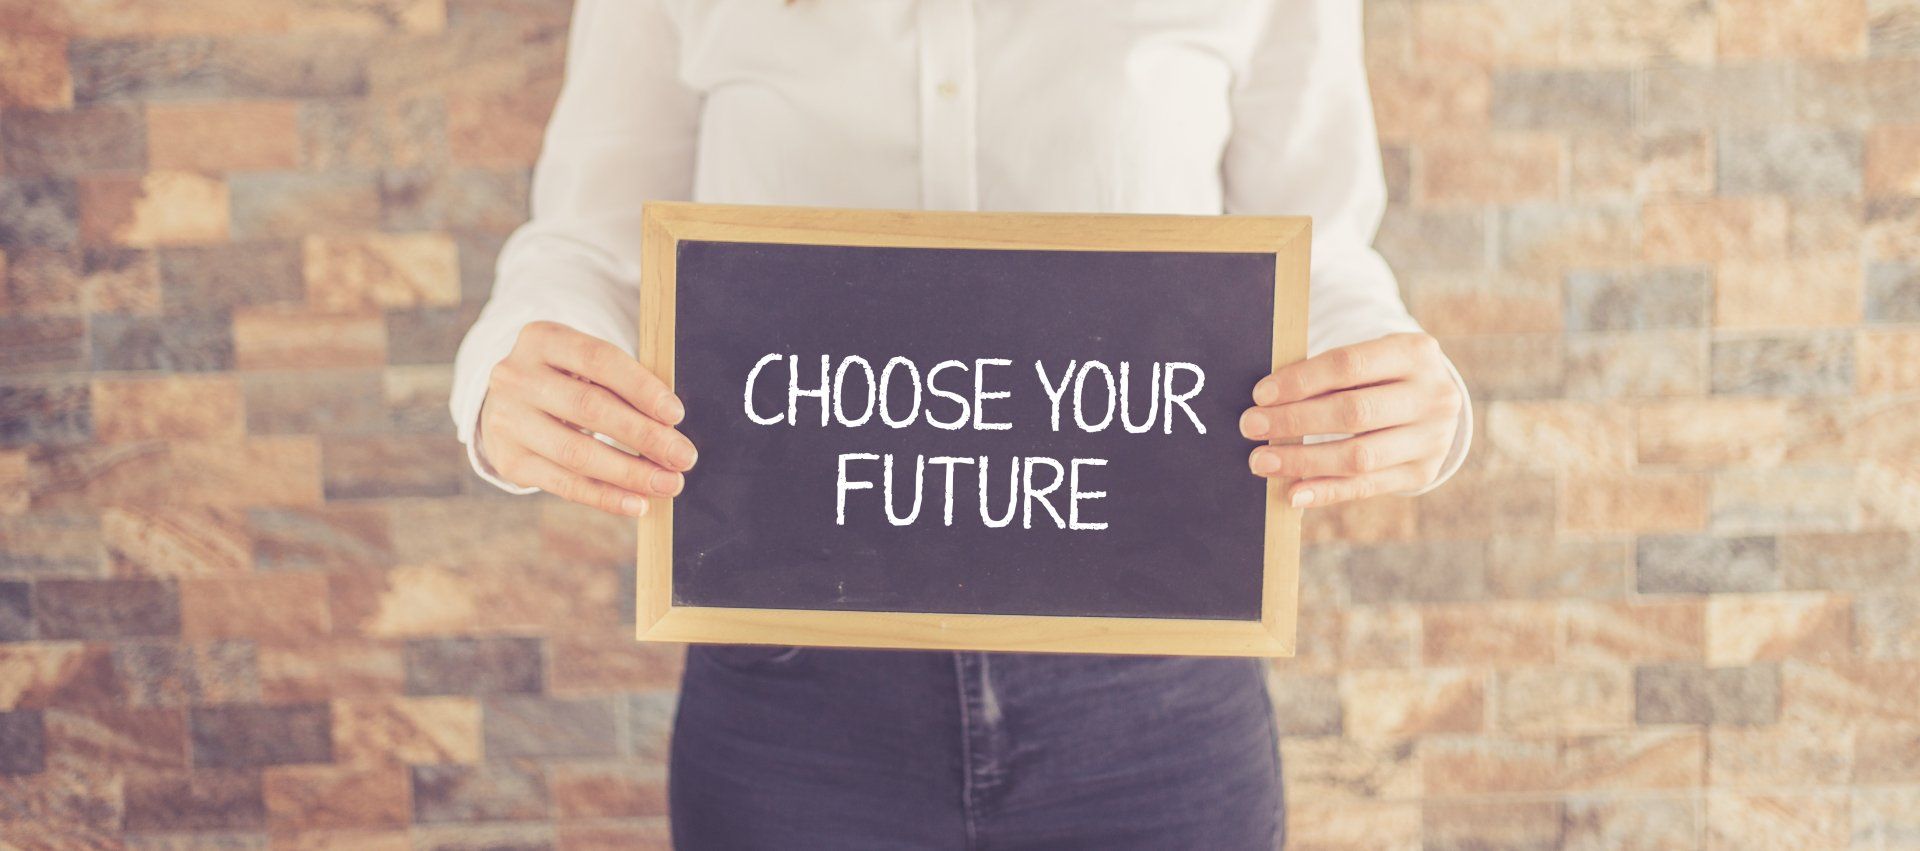 CHOOSE YOUR FUTURE CONCEPT